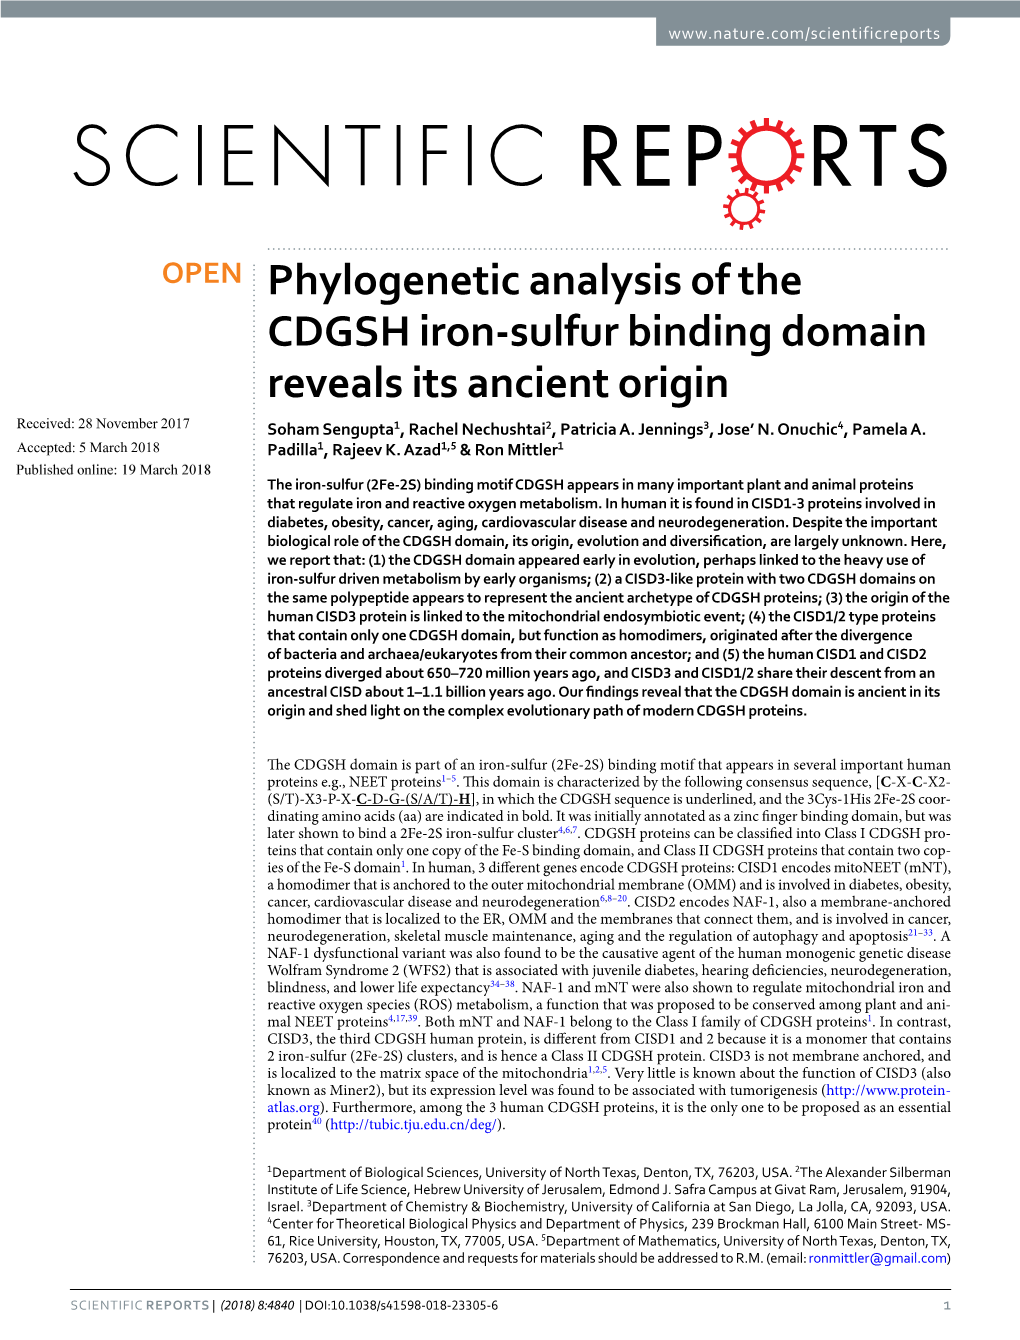 Phylogenetic Analysis of the CDGSH Iron-Sulfur Binding Domain Reveals Its Ancient Origin Received: 28 November 2017 Soham Sengupta1, Rachel Nechushtai2, Patricia A